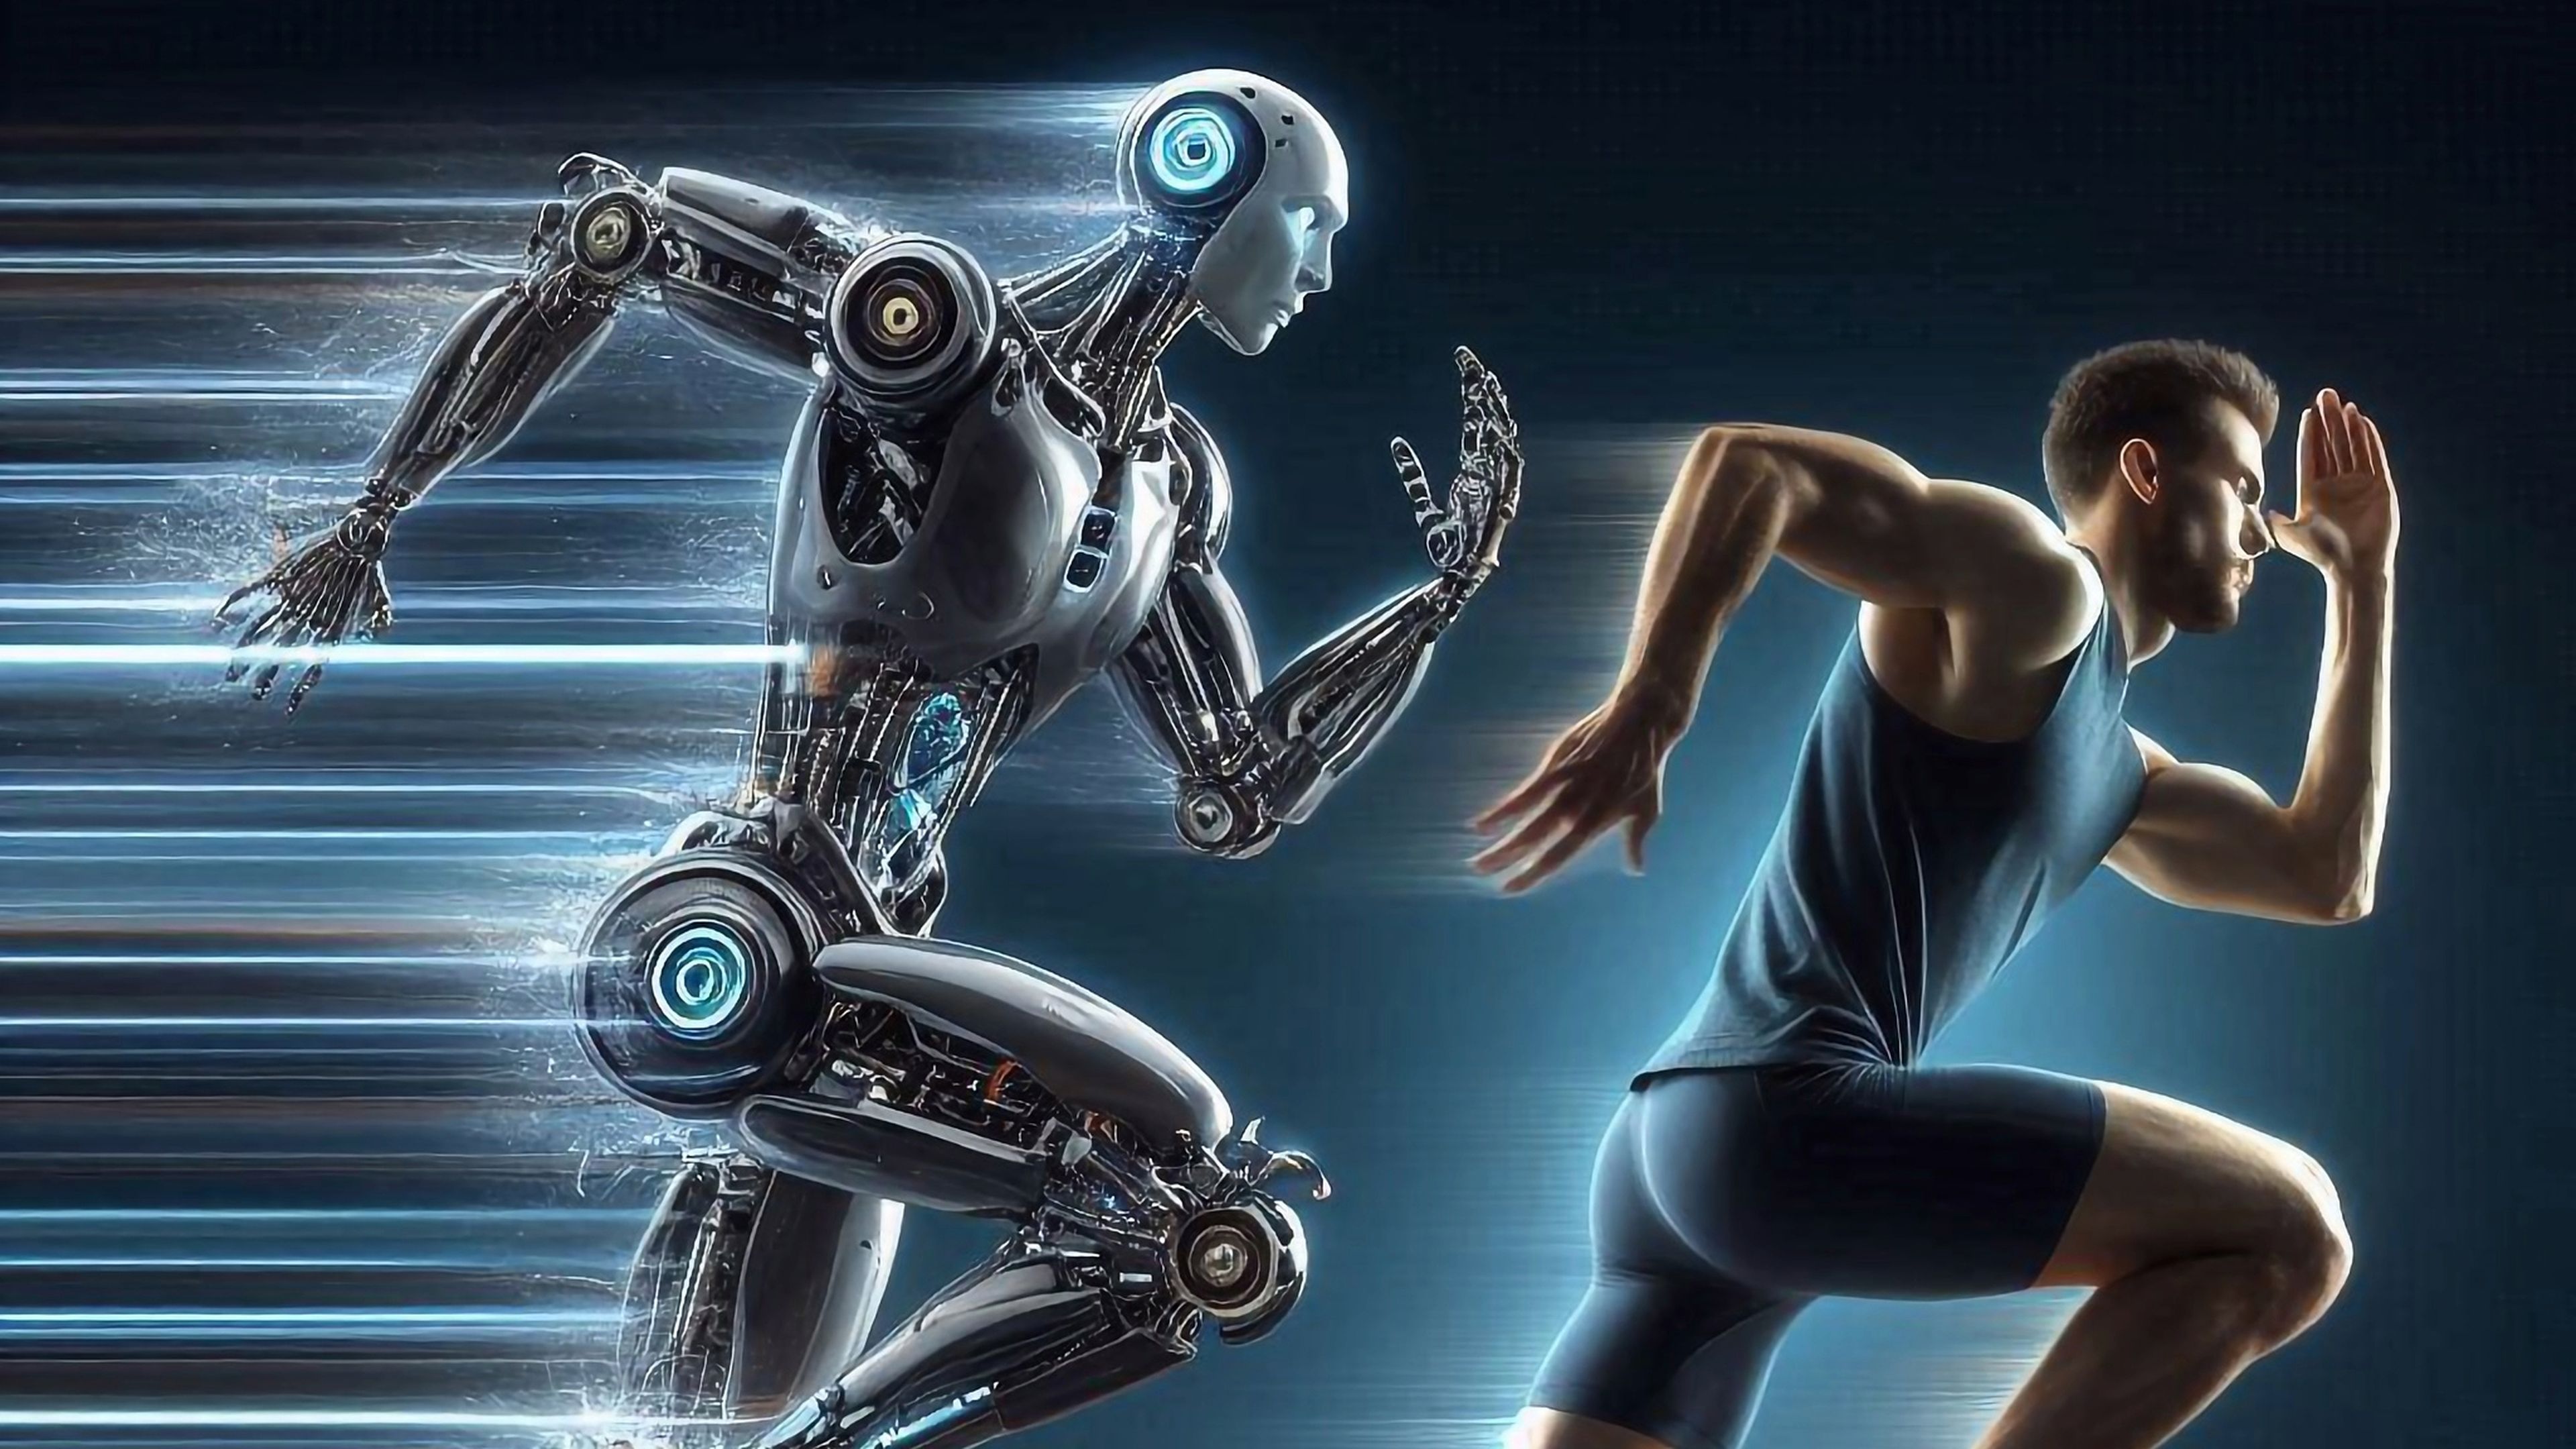 Ser humano corriendo contra un robot